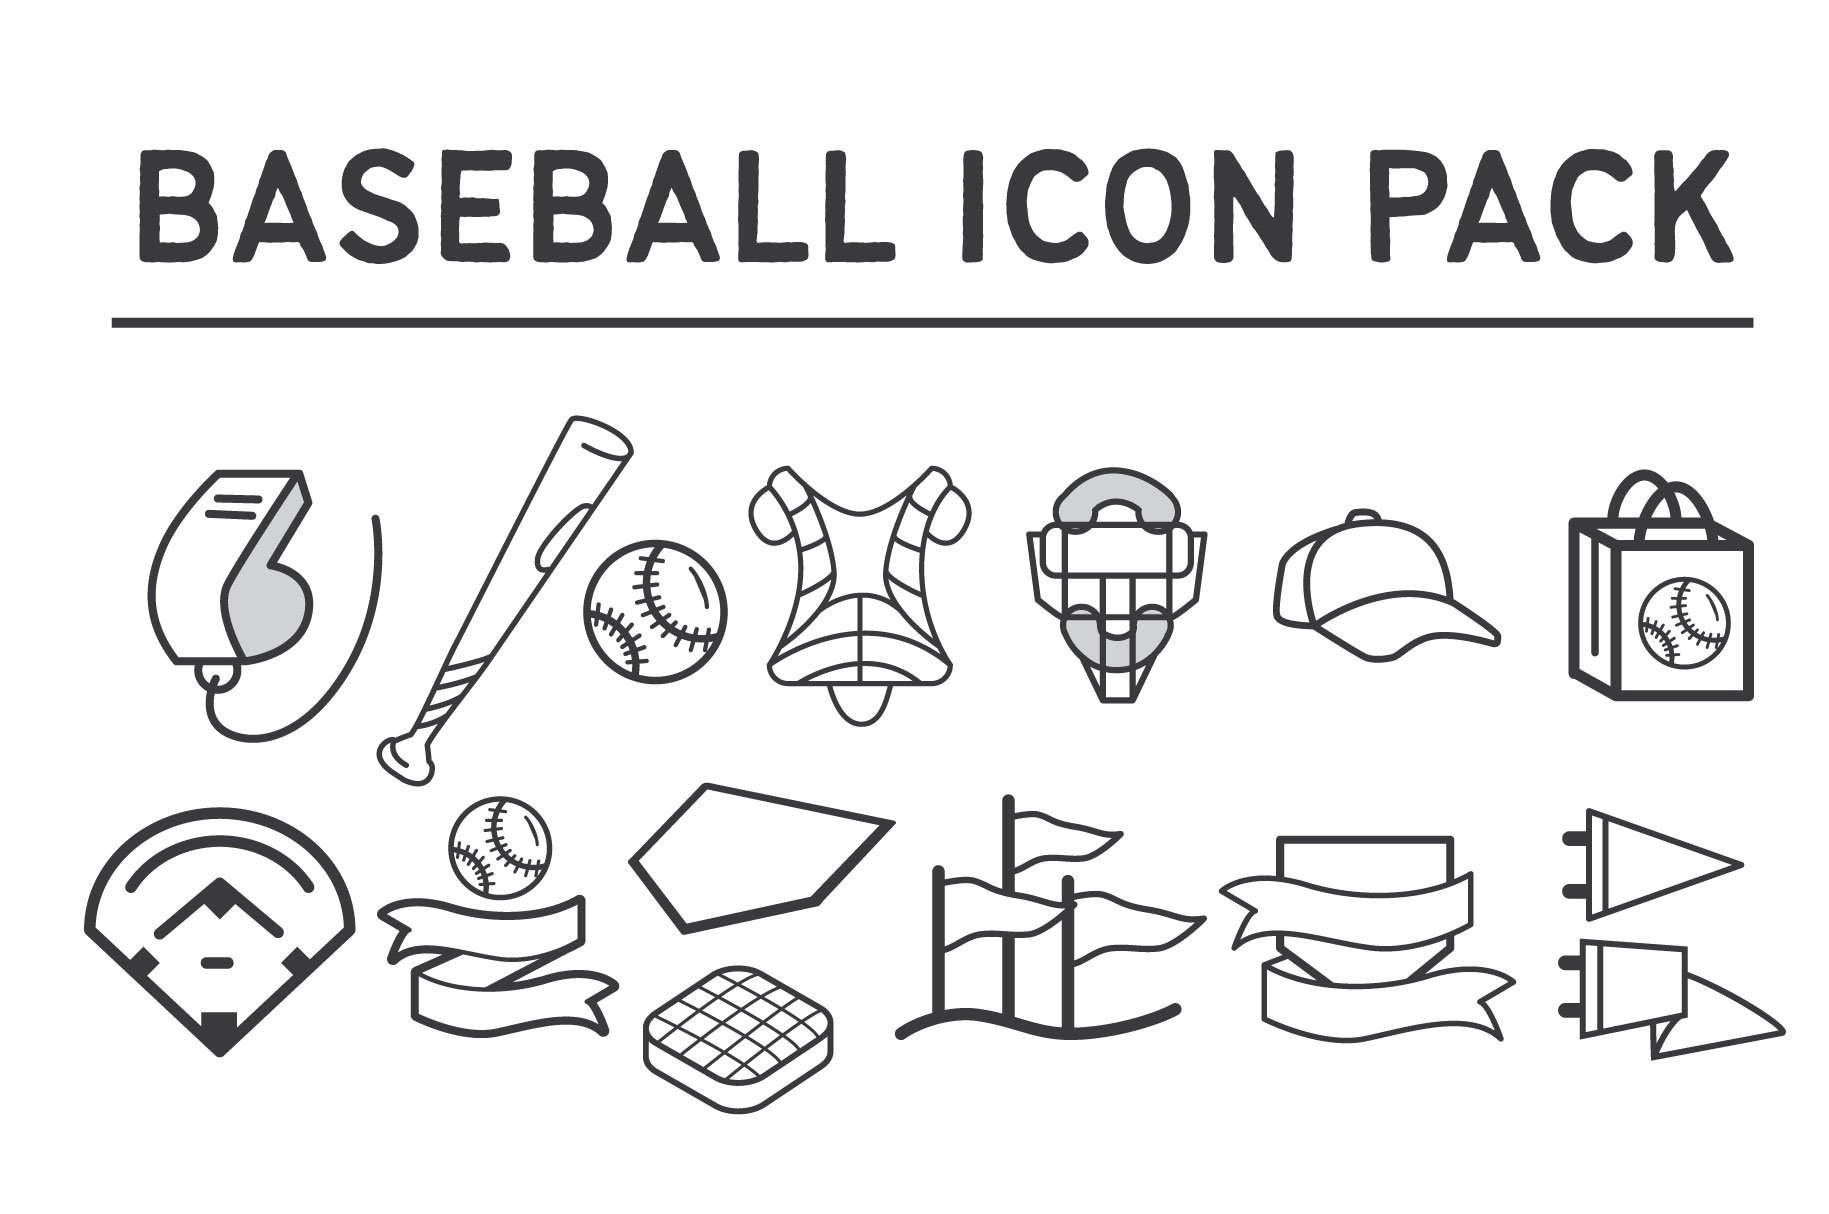 Outline baseball icon pack.